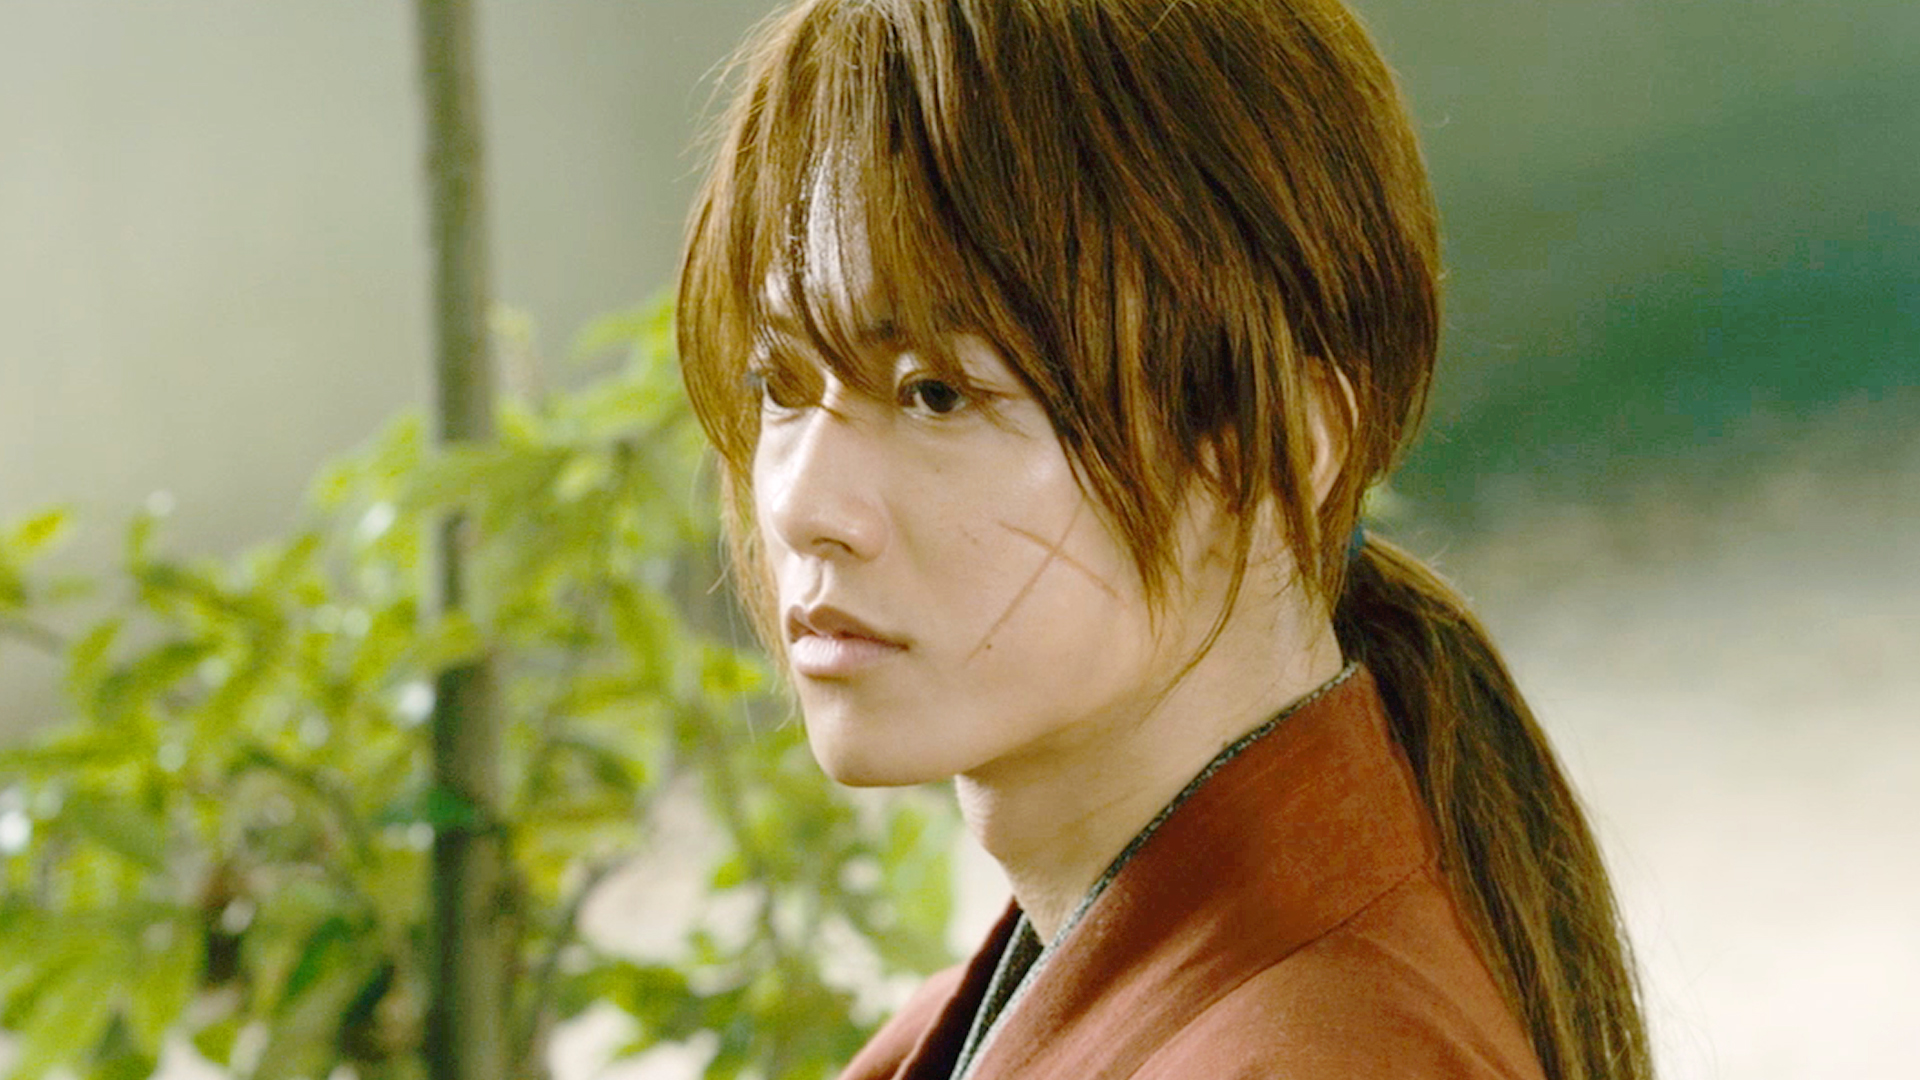 Trailer For Next Rurouni Kenshin Movie Looks Great »